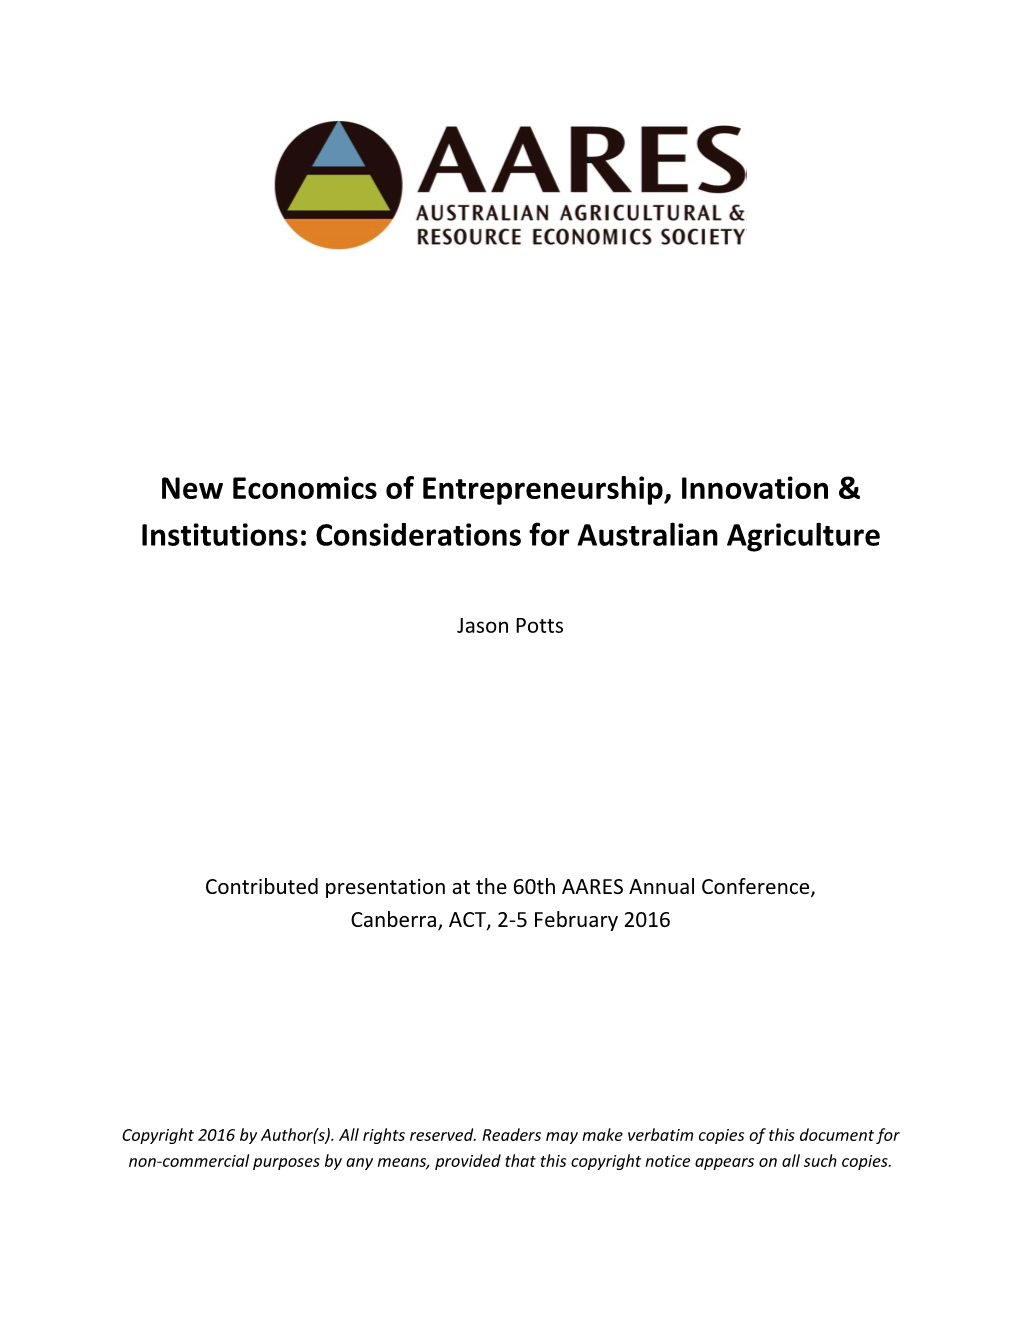 New Economics of Entrepreneurship, Innovation & Institutions